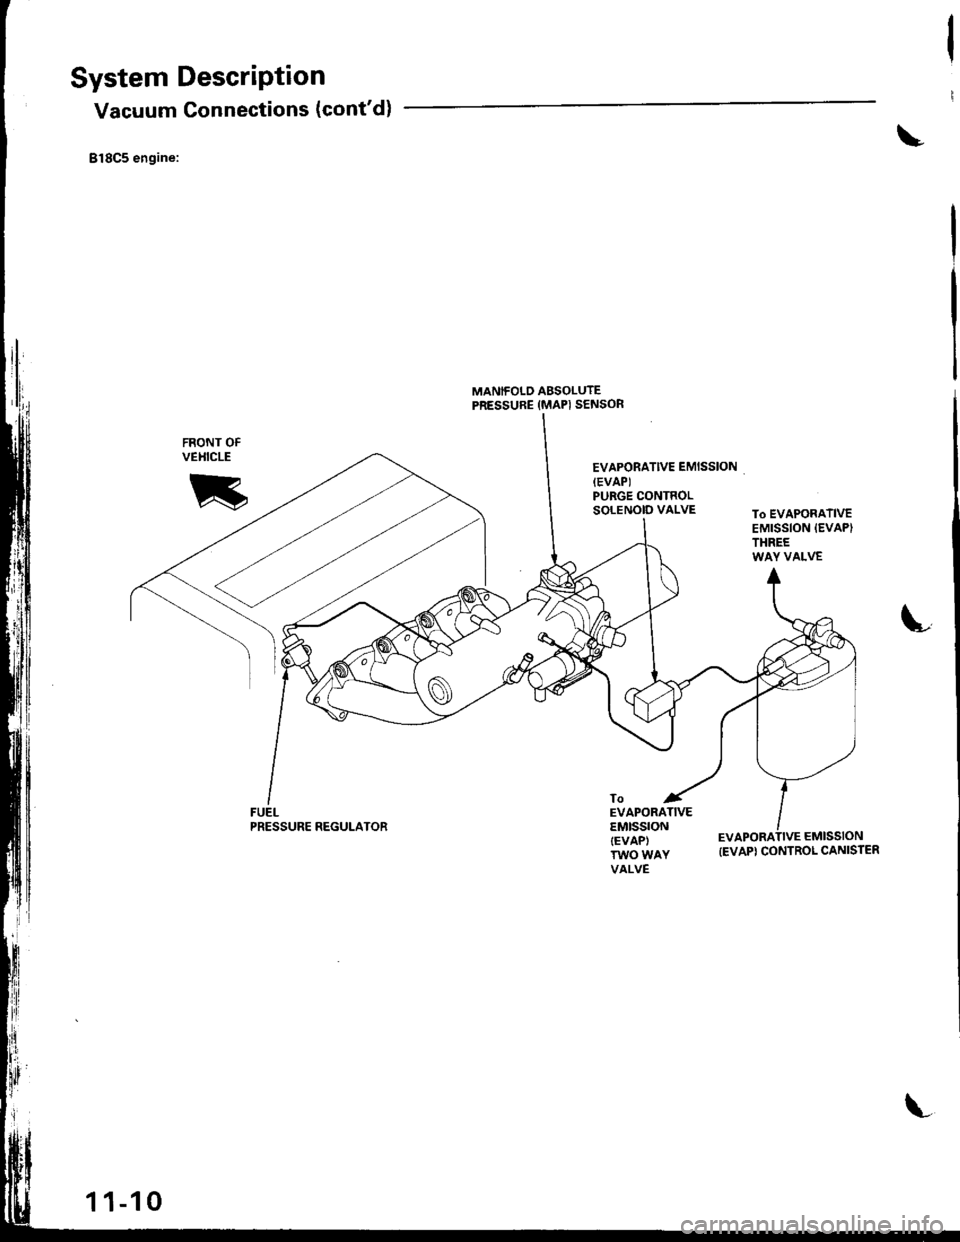 HONDA INTEGRA 1998 4.G Workshop Manual System DescriPtion
Vacuum Connections (contd)
Bl8C5 engine:
FUELPRESSURE REGULATOR
MANIFOLD ABSOLUTEPRESSURE (MAPI SENSOR
EVAPORATIVE EMISSIONIEVAPIPURGE CONTROLSOLENOID VALVETo EVAPORATIVEEMISSION I